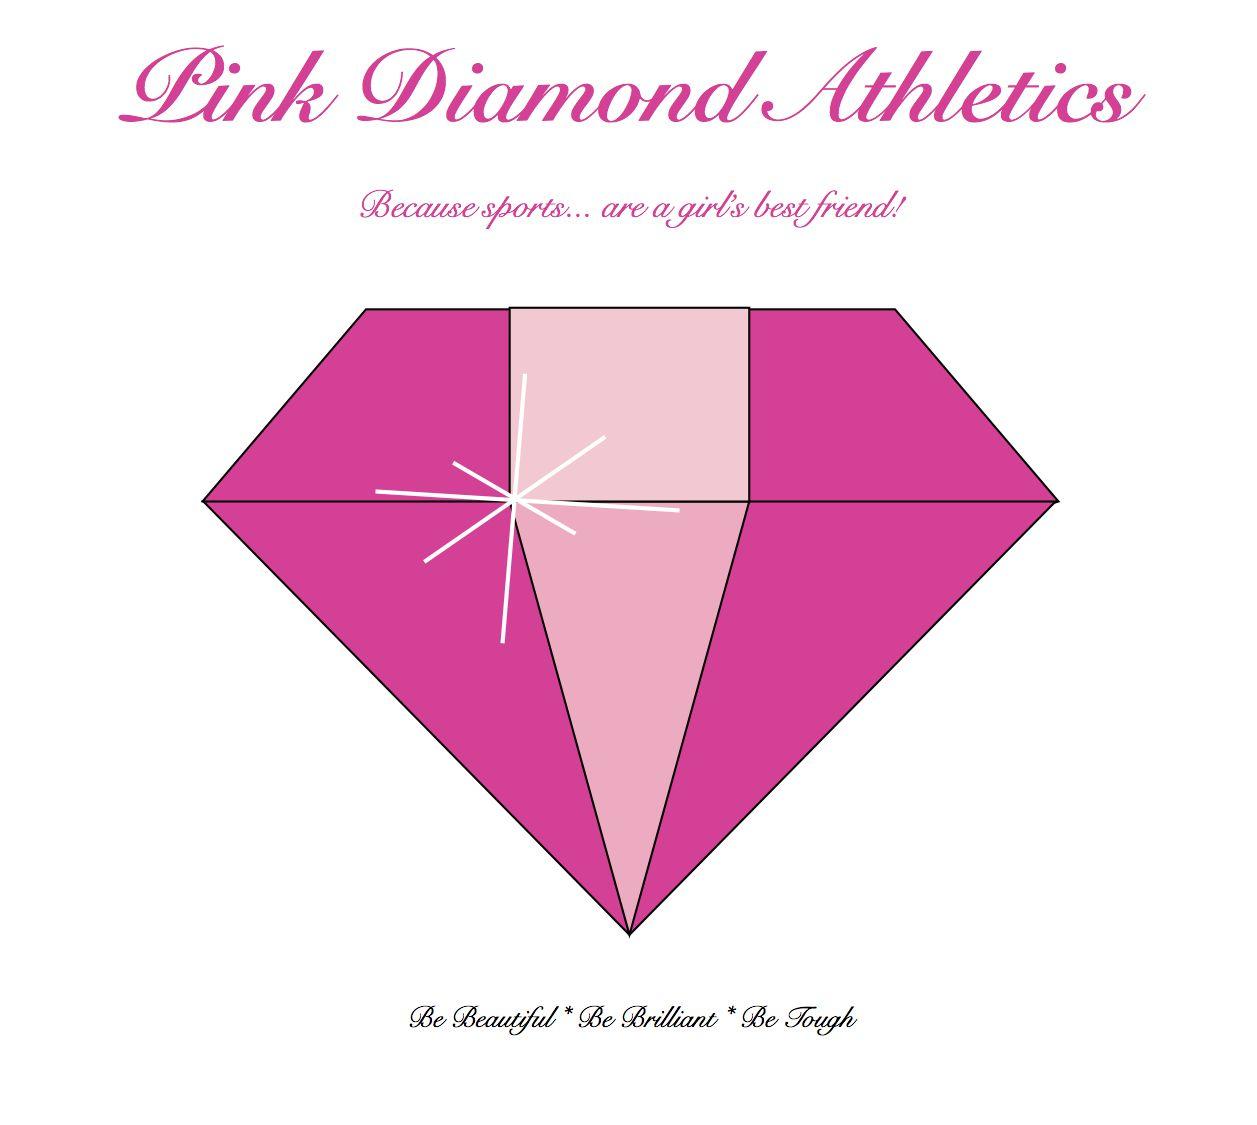 Pink Diamonds Logo - Pink Diamond Athletics: May 2013